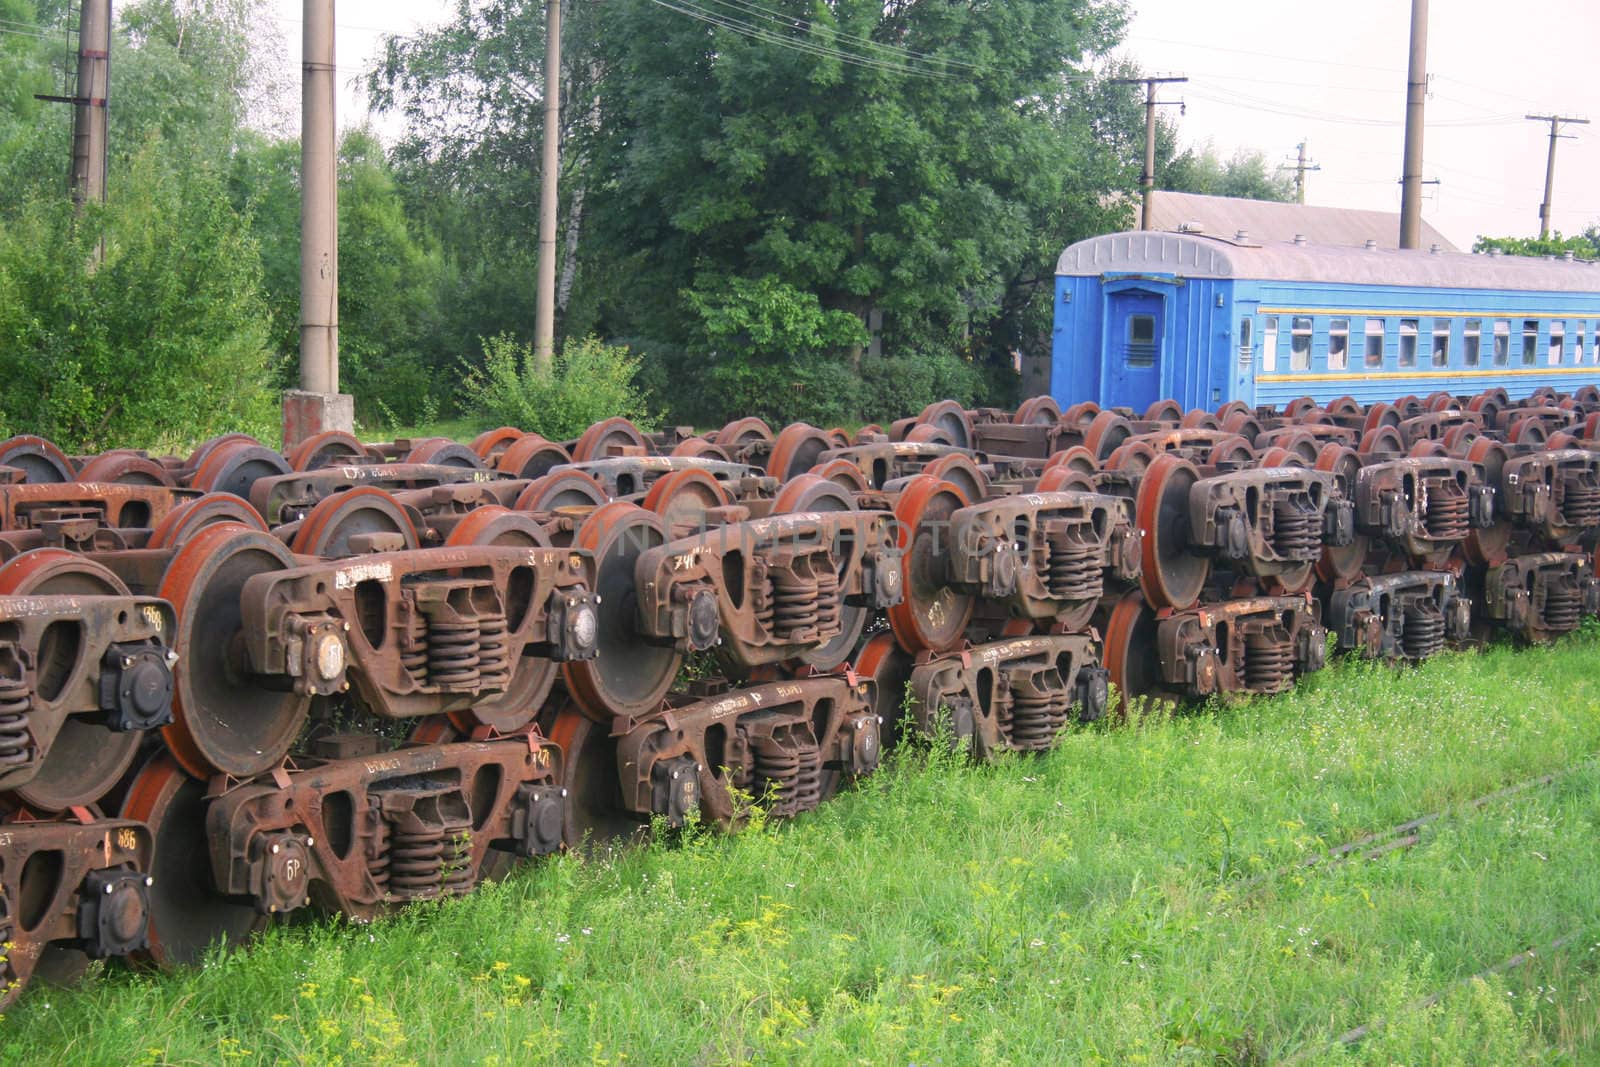 Stacked train wheels at train depot